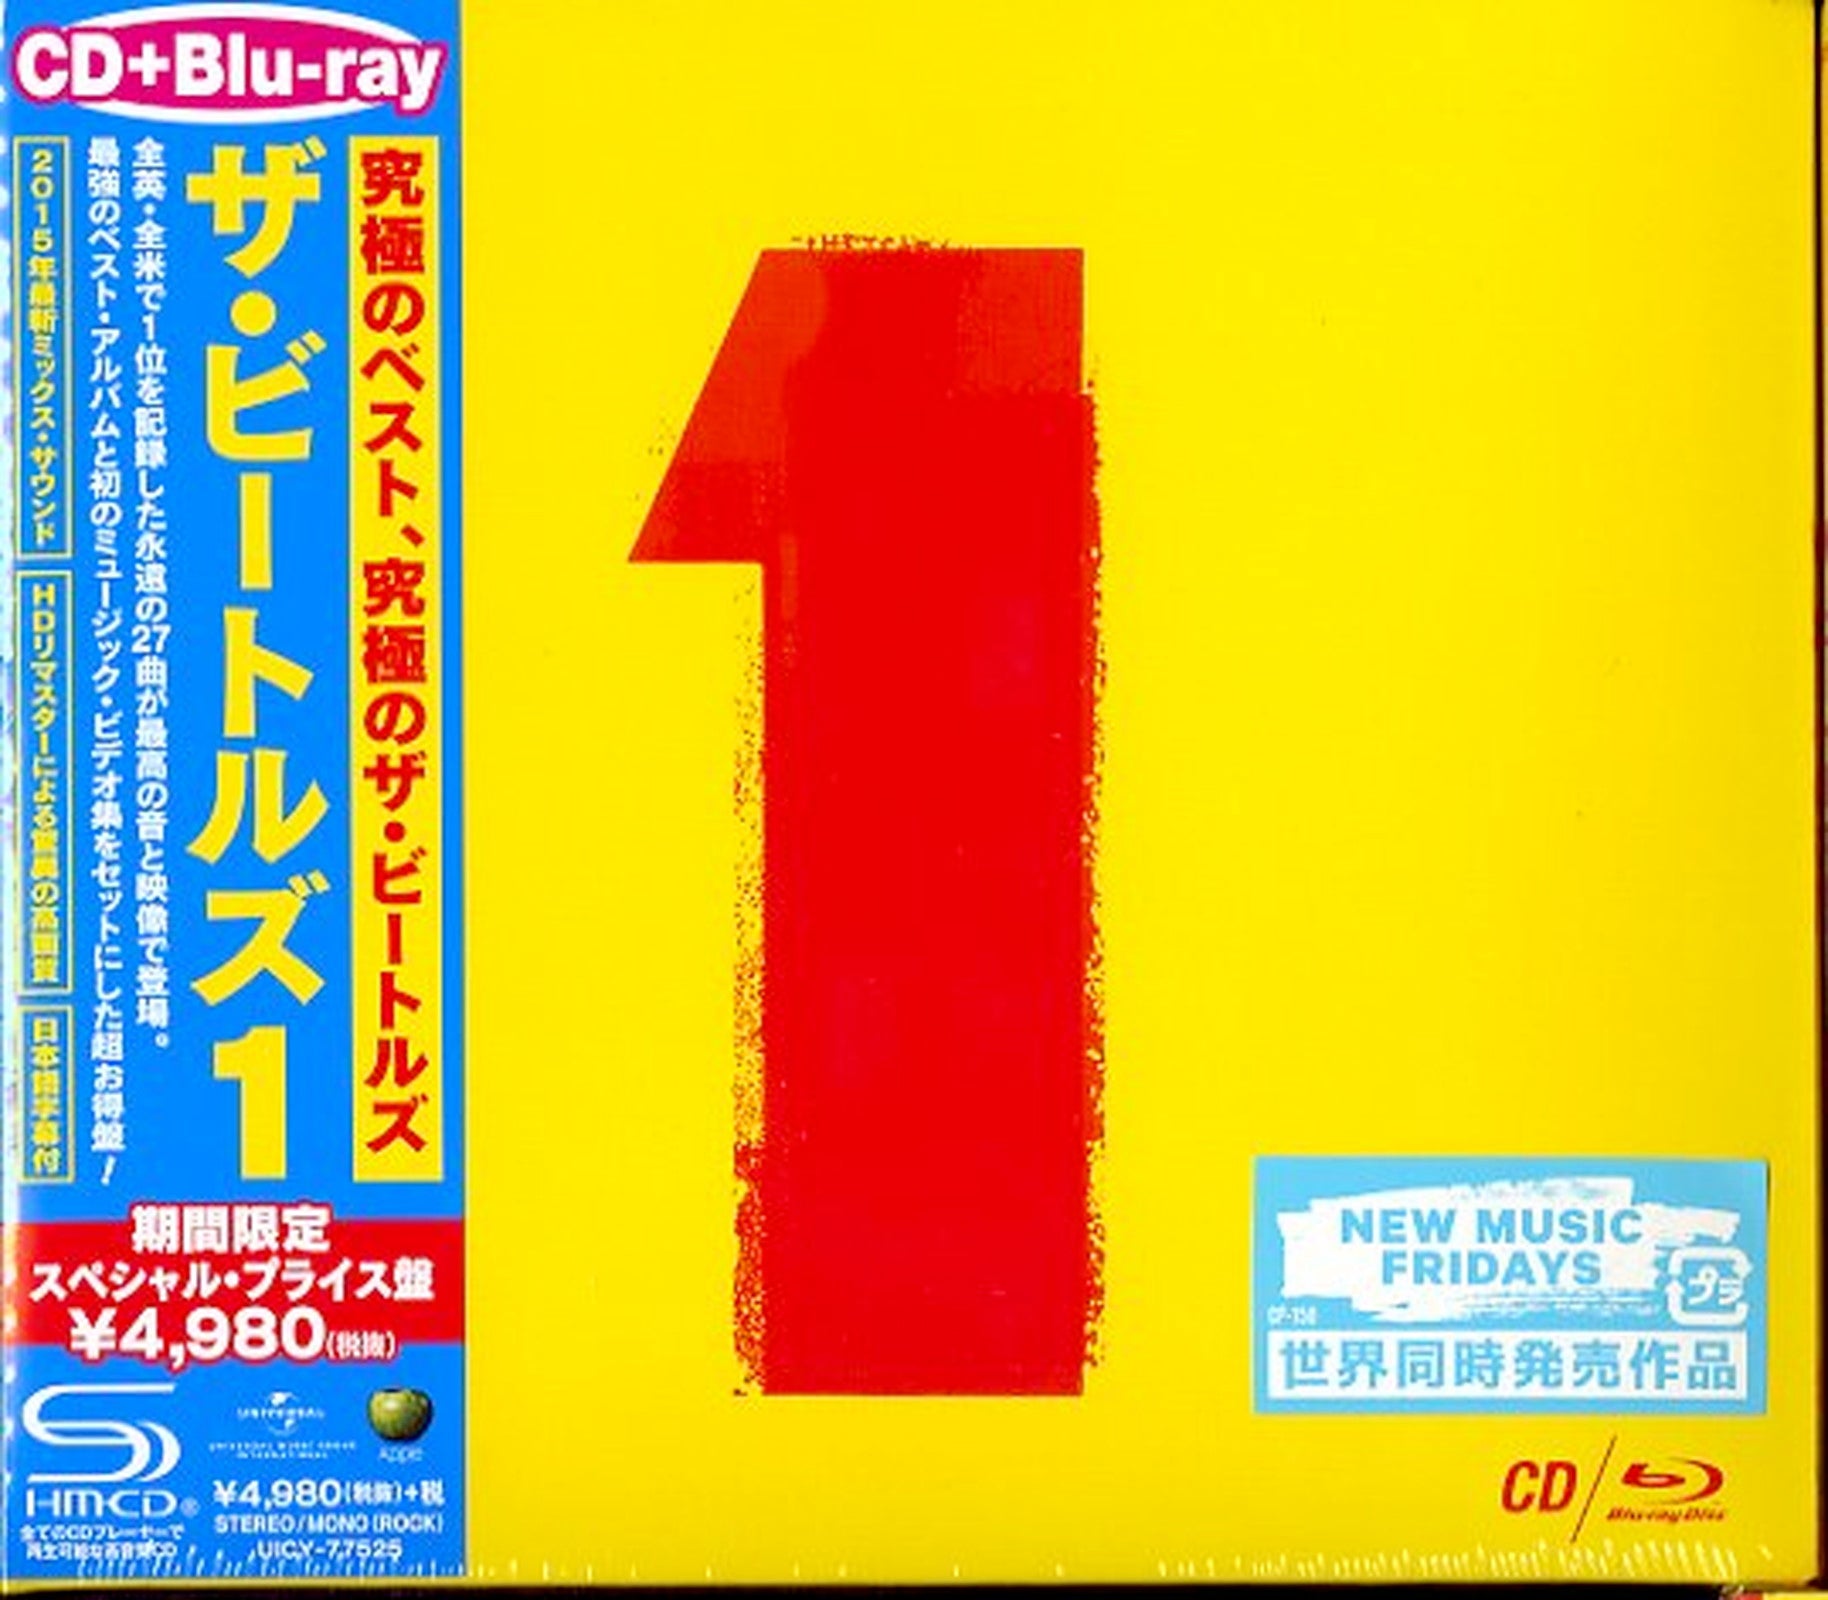 The Beatles - Beatles - Japan SHM-CD+Blu-ray Limited Edition - CDs Vinyl Japan